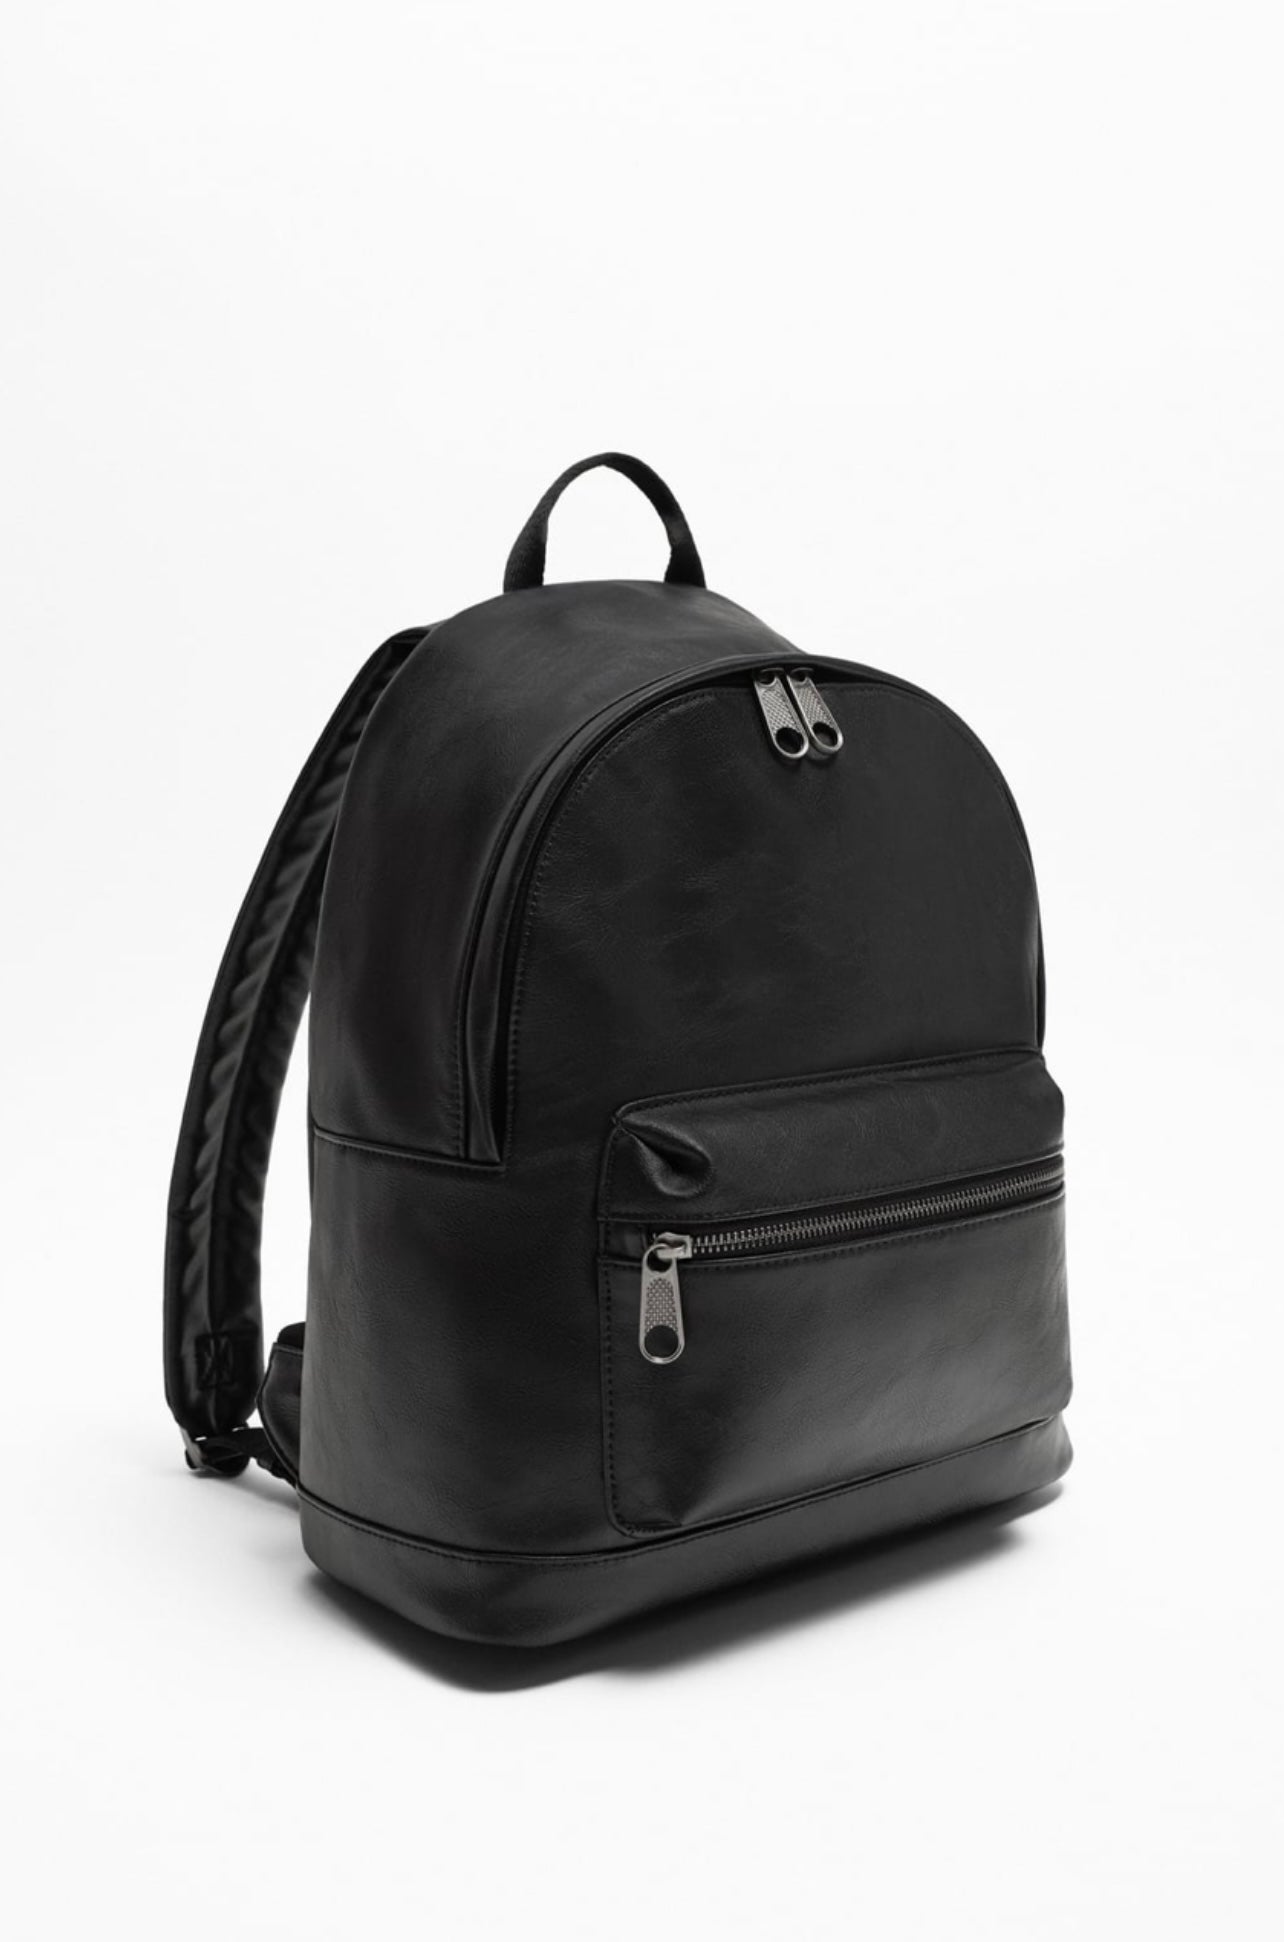 Zara Contrast Backpack Bag